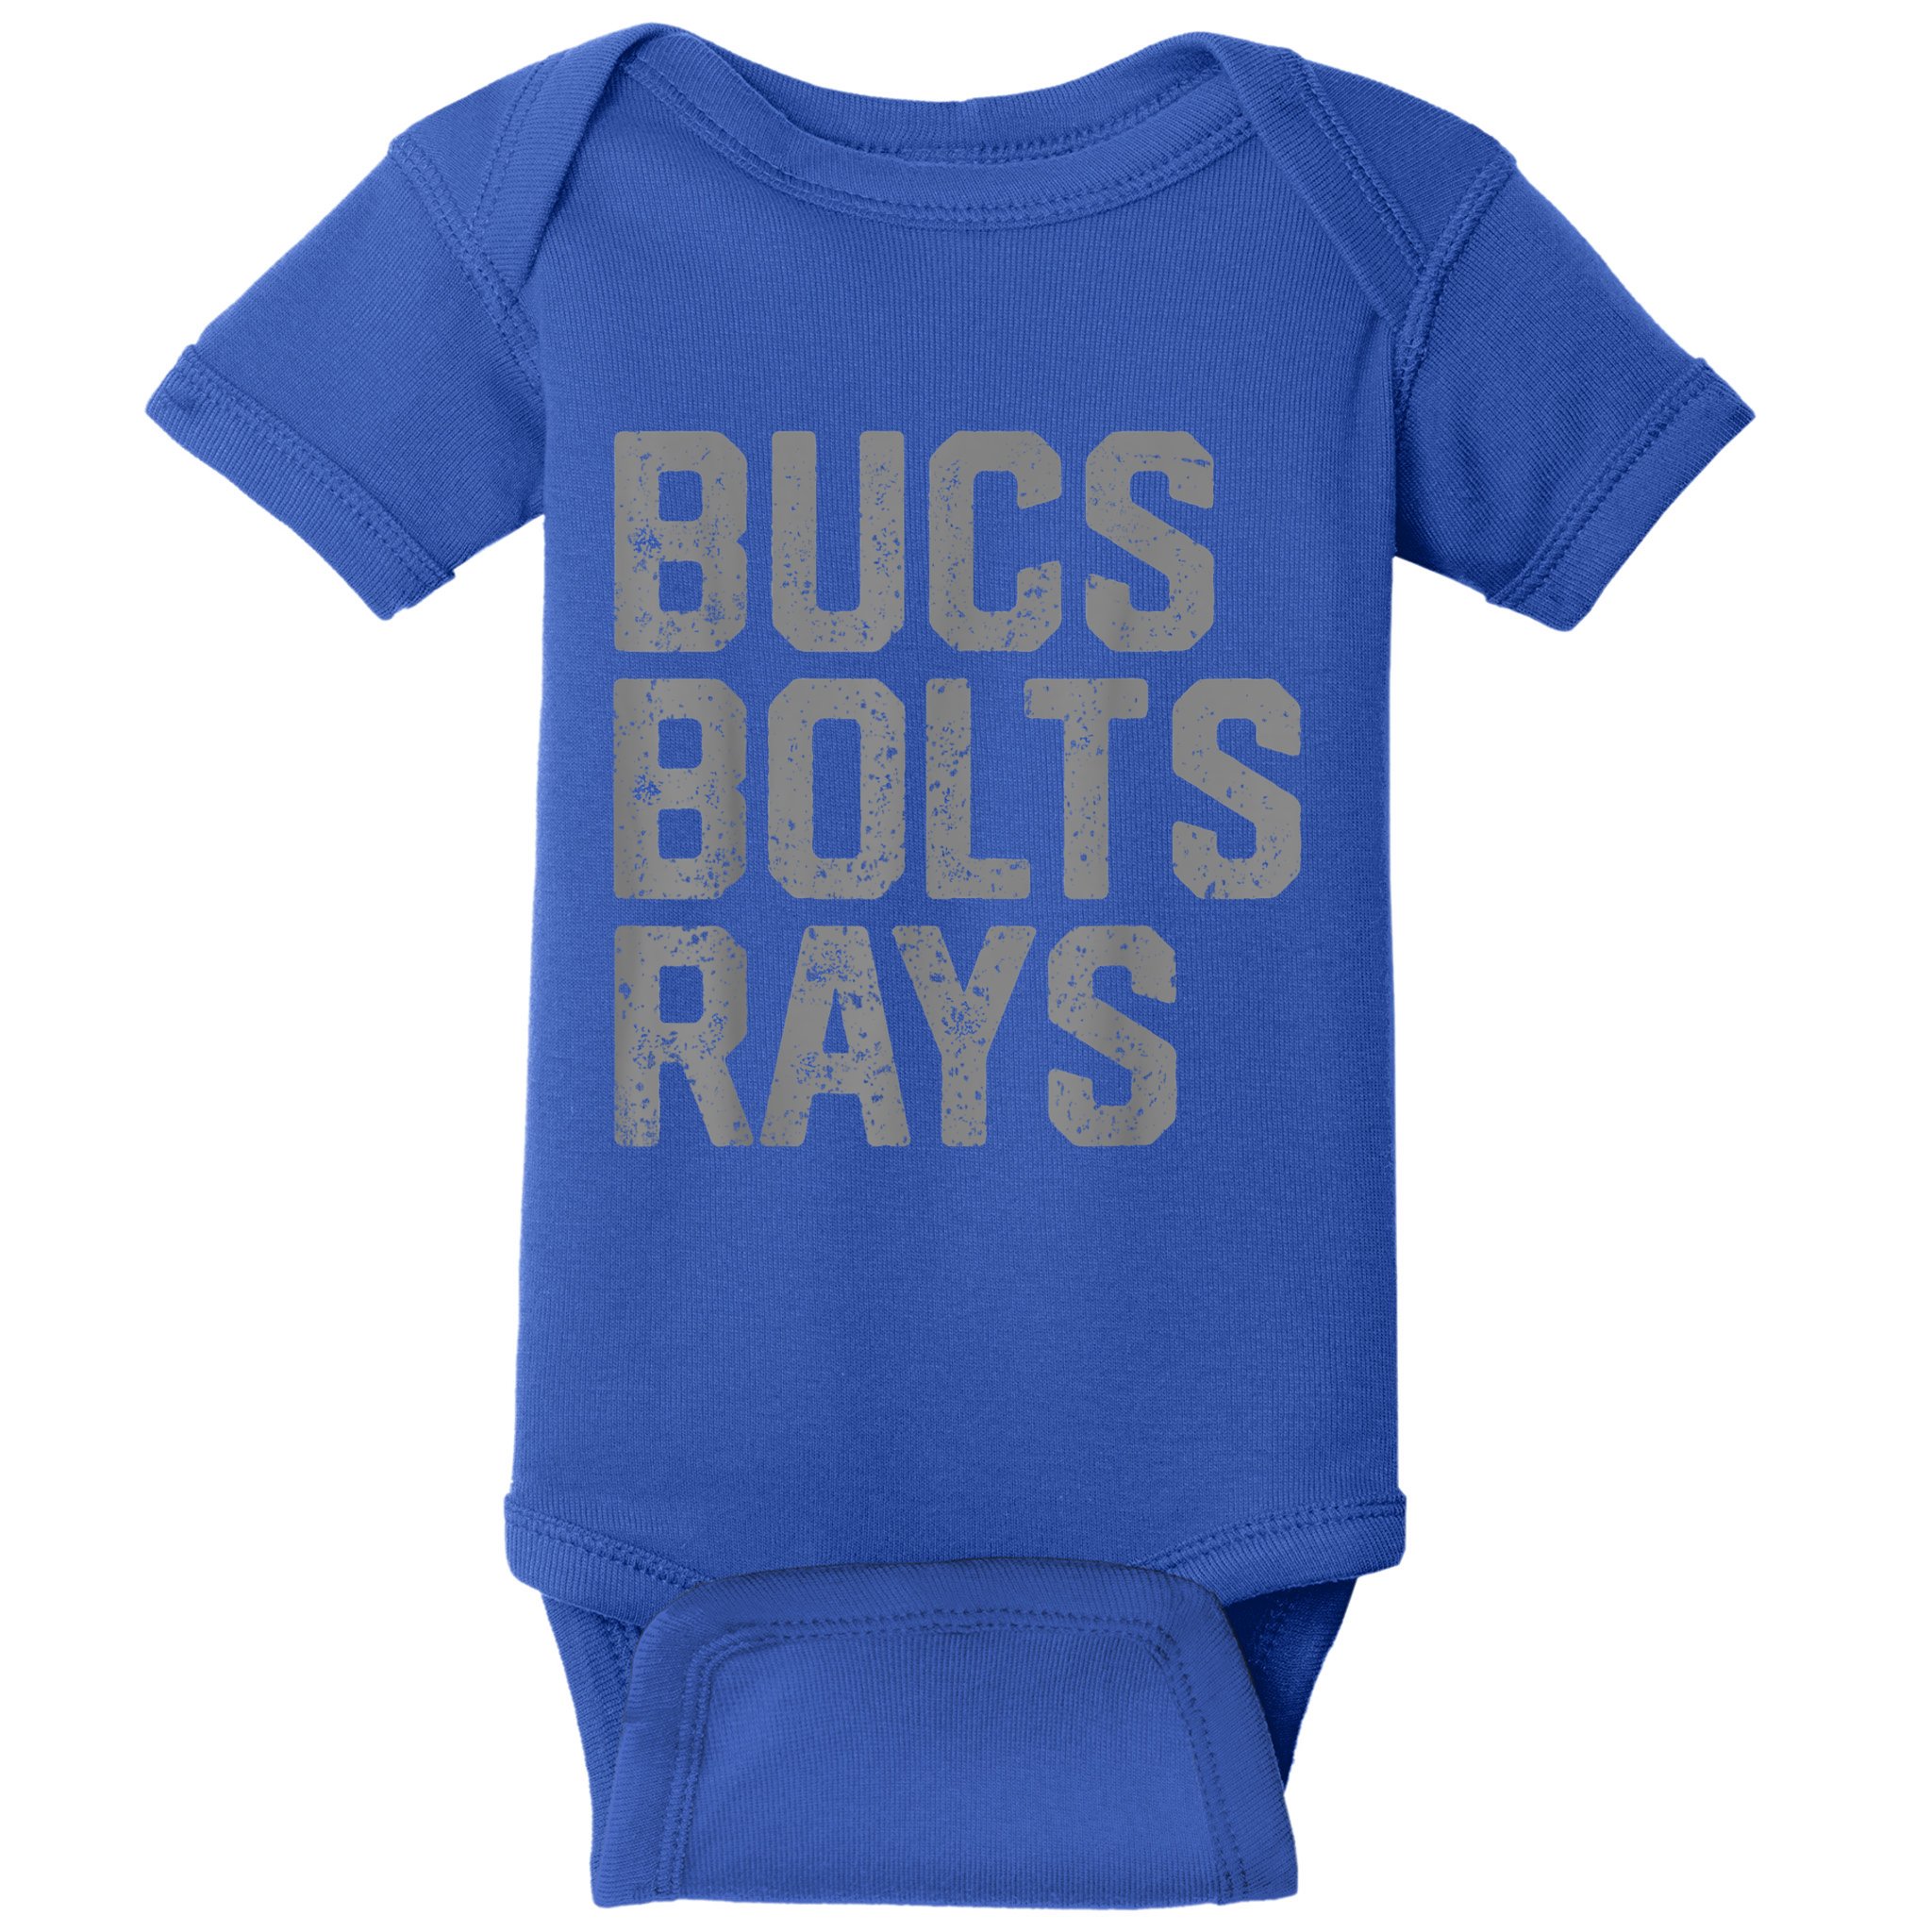 Bucs Bolts Rays Baby Bodysuit